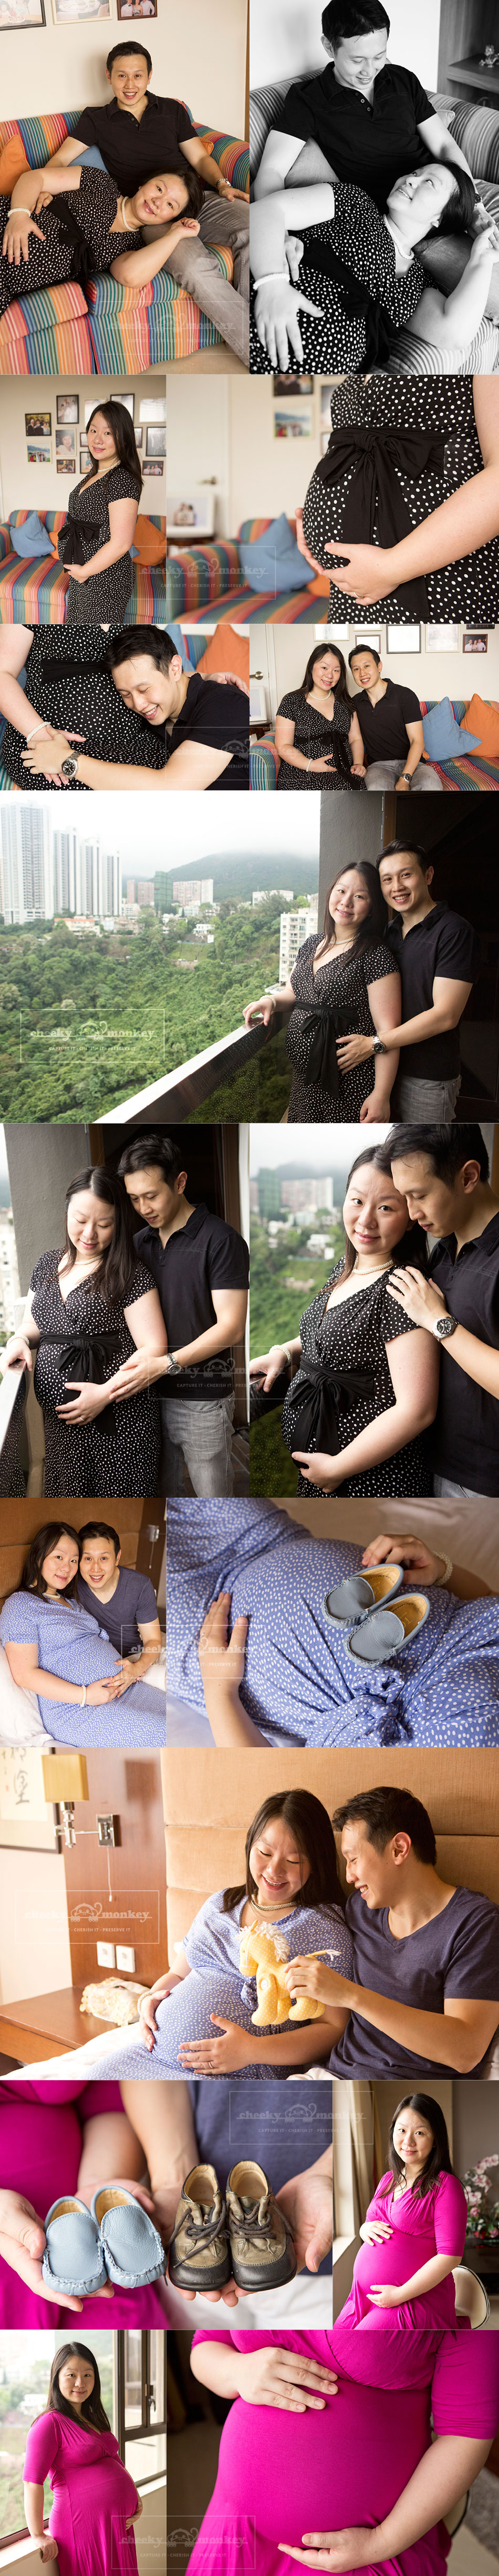 MaternityPhotography